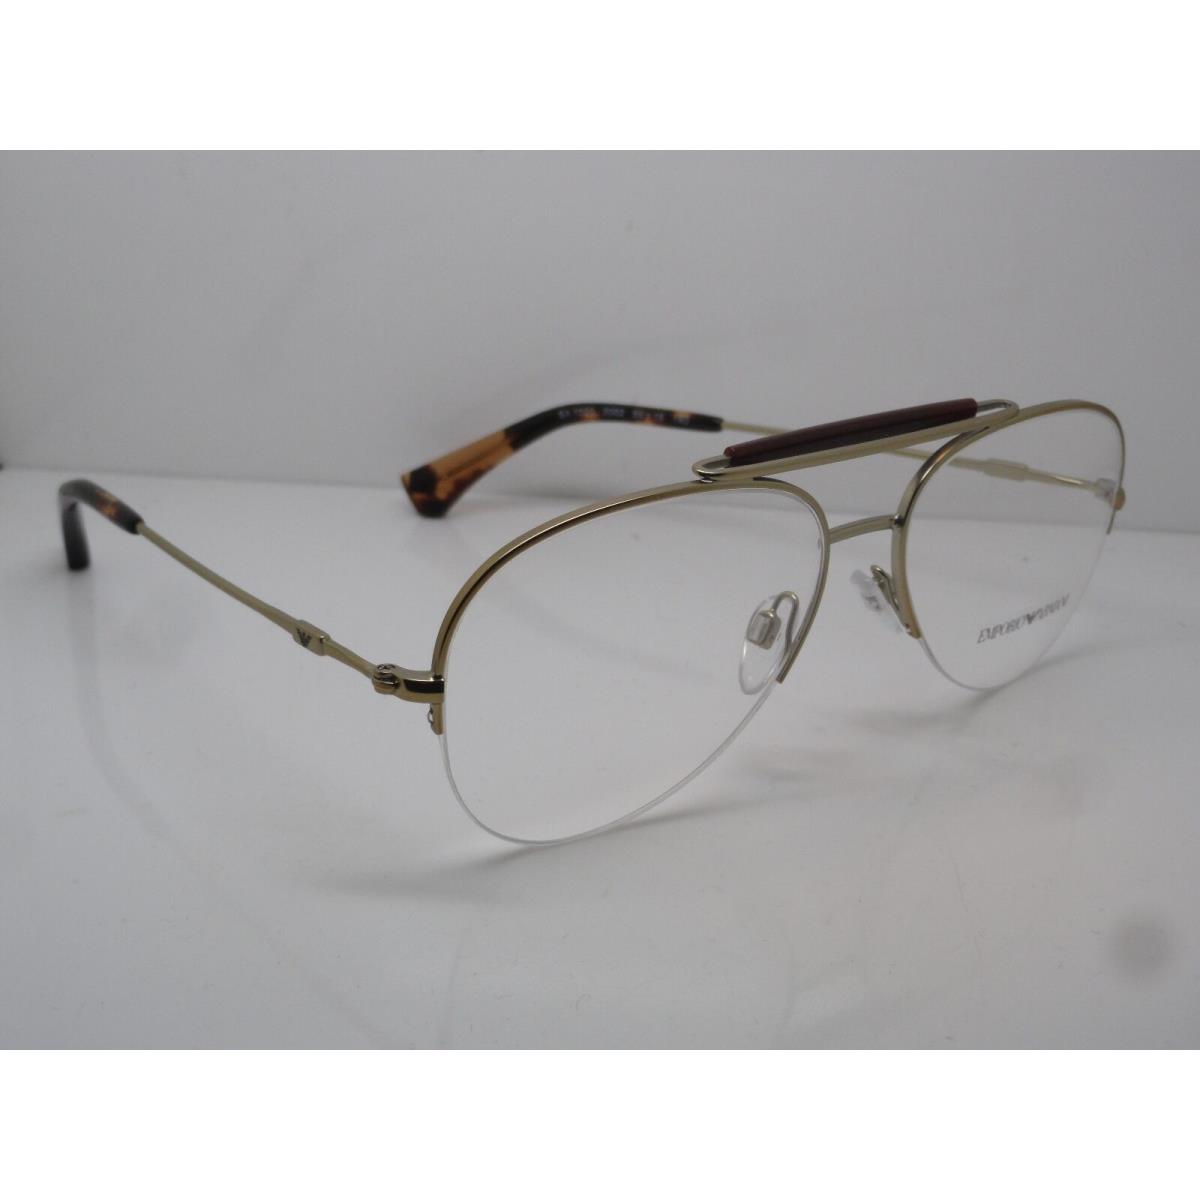 Emporio Armani eyeglasses  - Matte Gold Frame 0